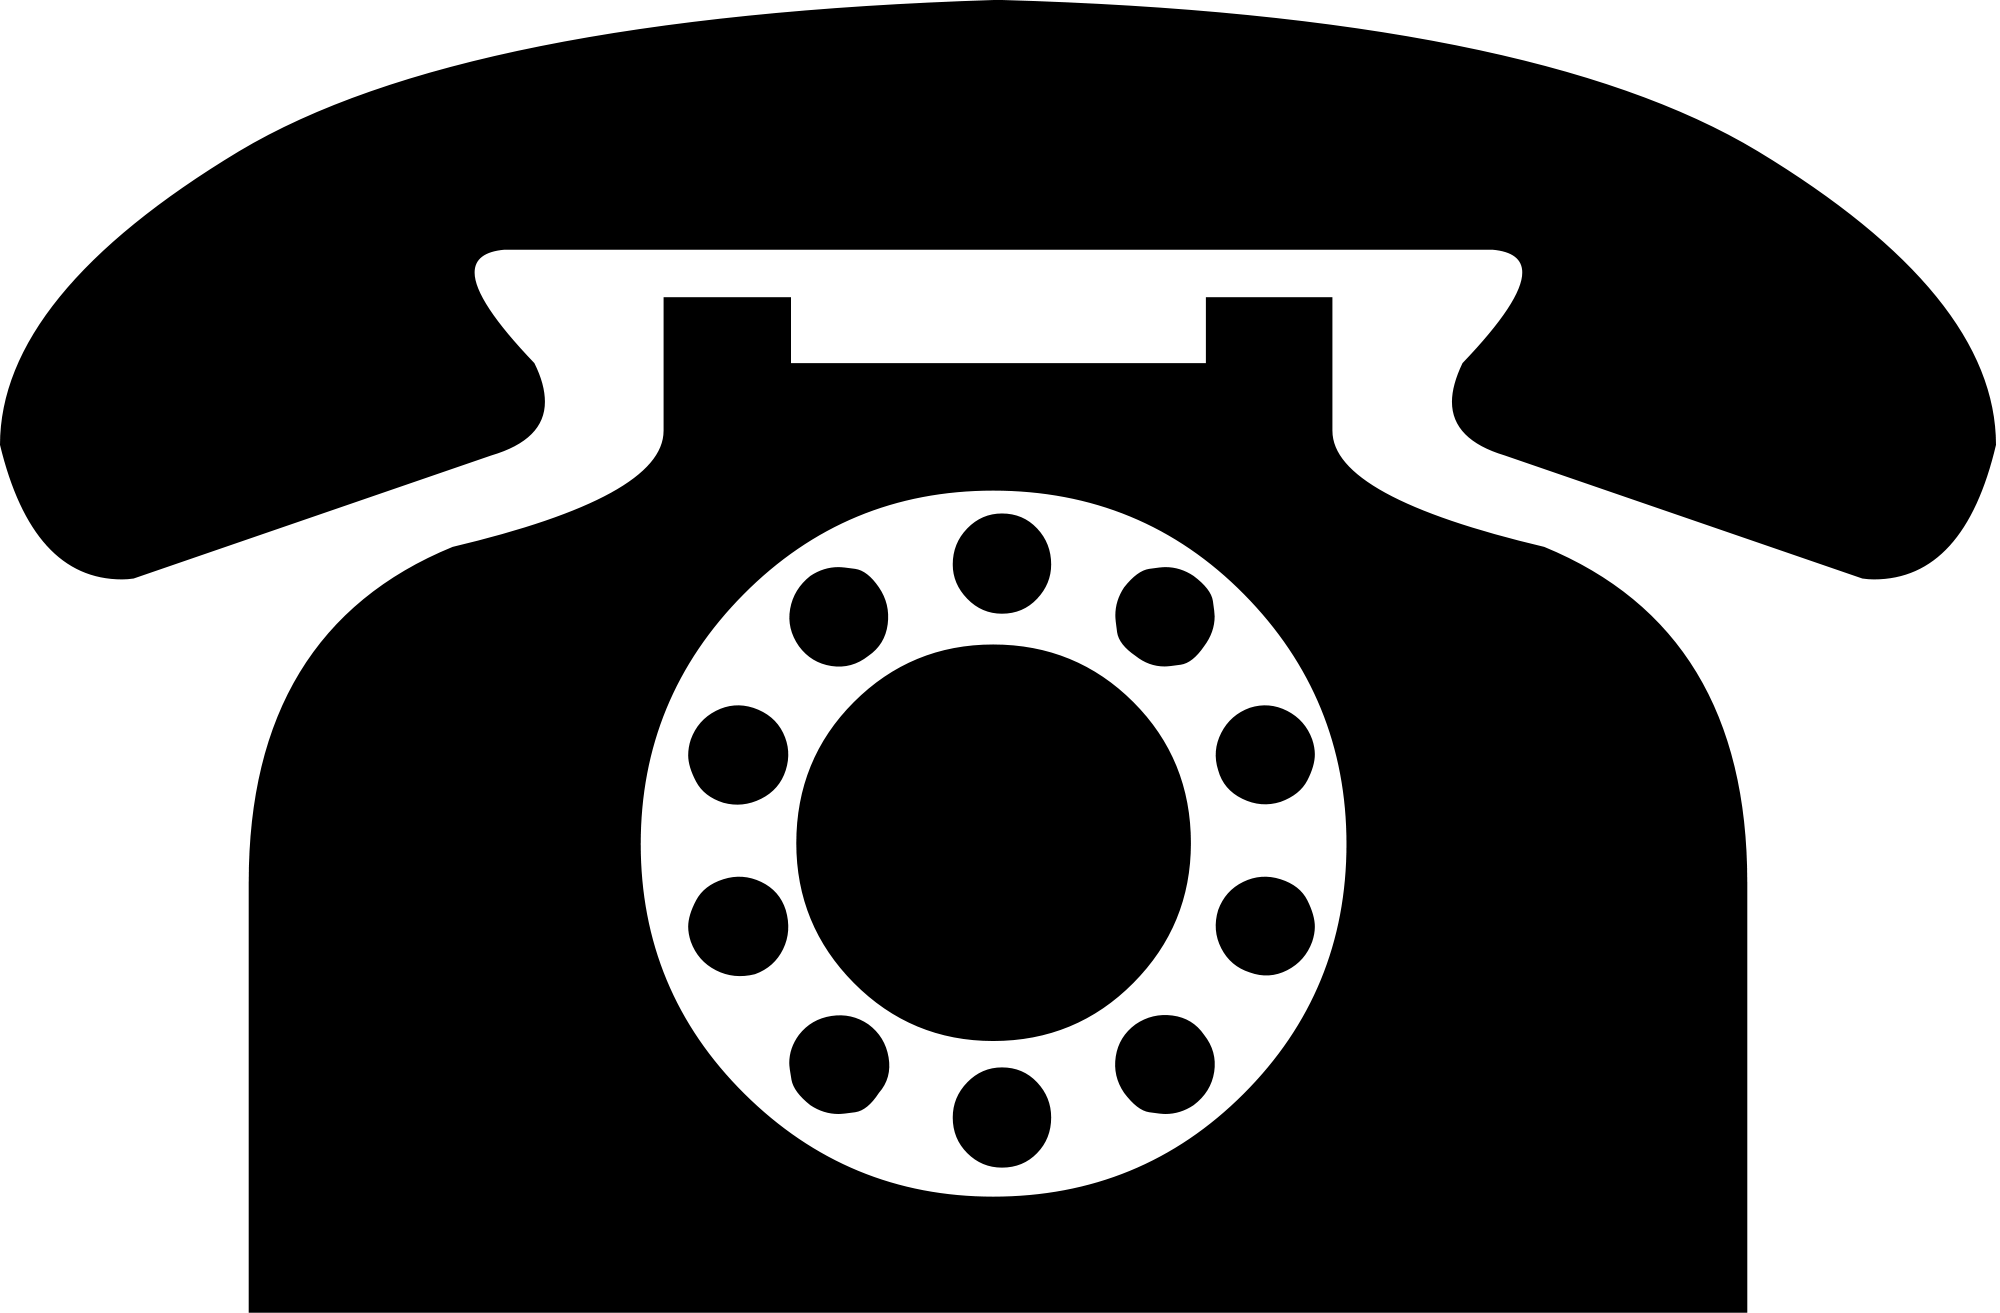 Old Telephone Logo - File:Black telephone icon from DejaVu Sans.svg - Wikimedia Commons